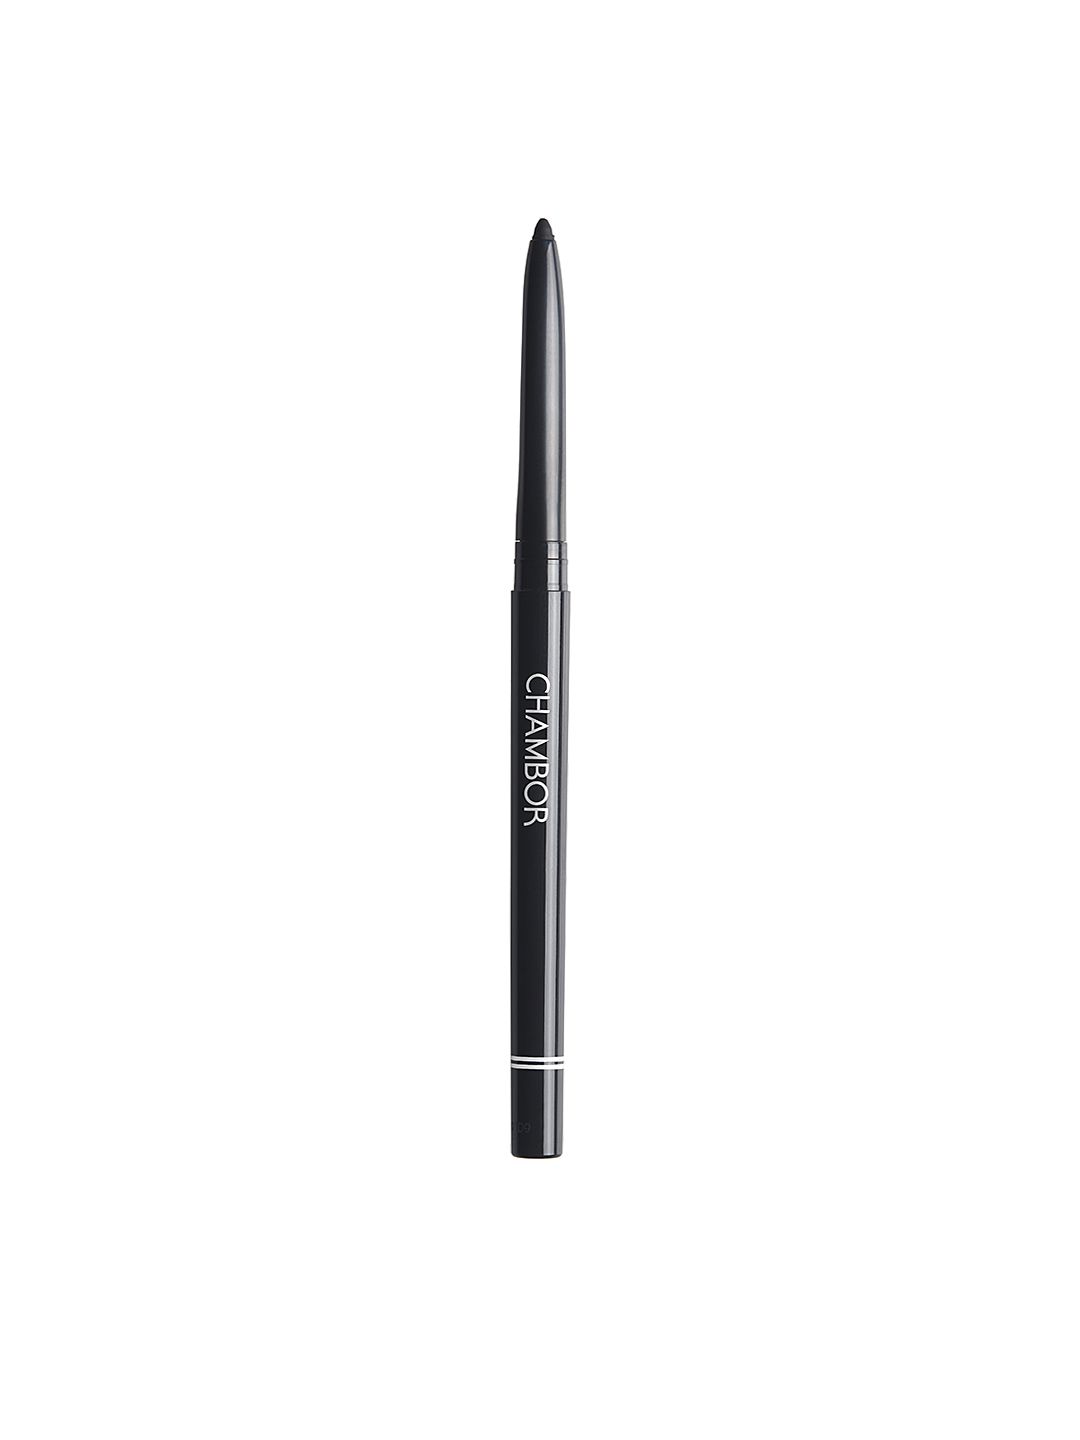 Chambor Intense Definition Gel Eyeliner Pencil - Blackest Black 101 0.25 g Price in India